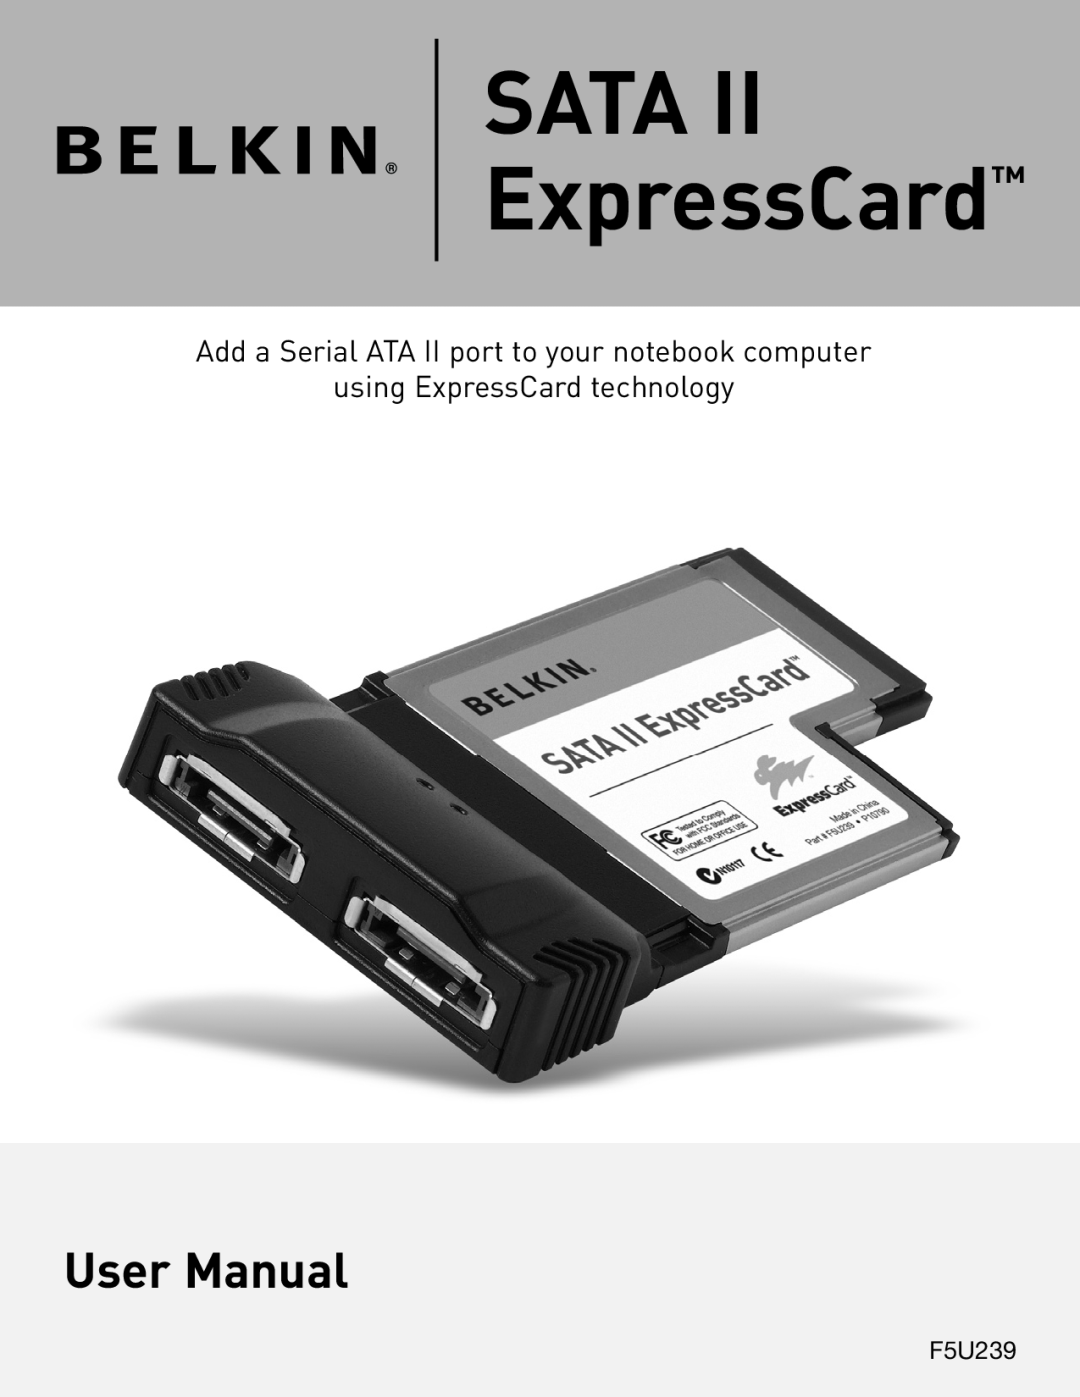 Belkin F5U239 manual SATA ExpressCard, Add a Serial ATA II port to your notebook computer, using ExpressCard technology 